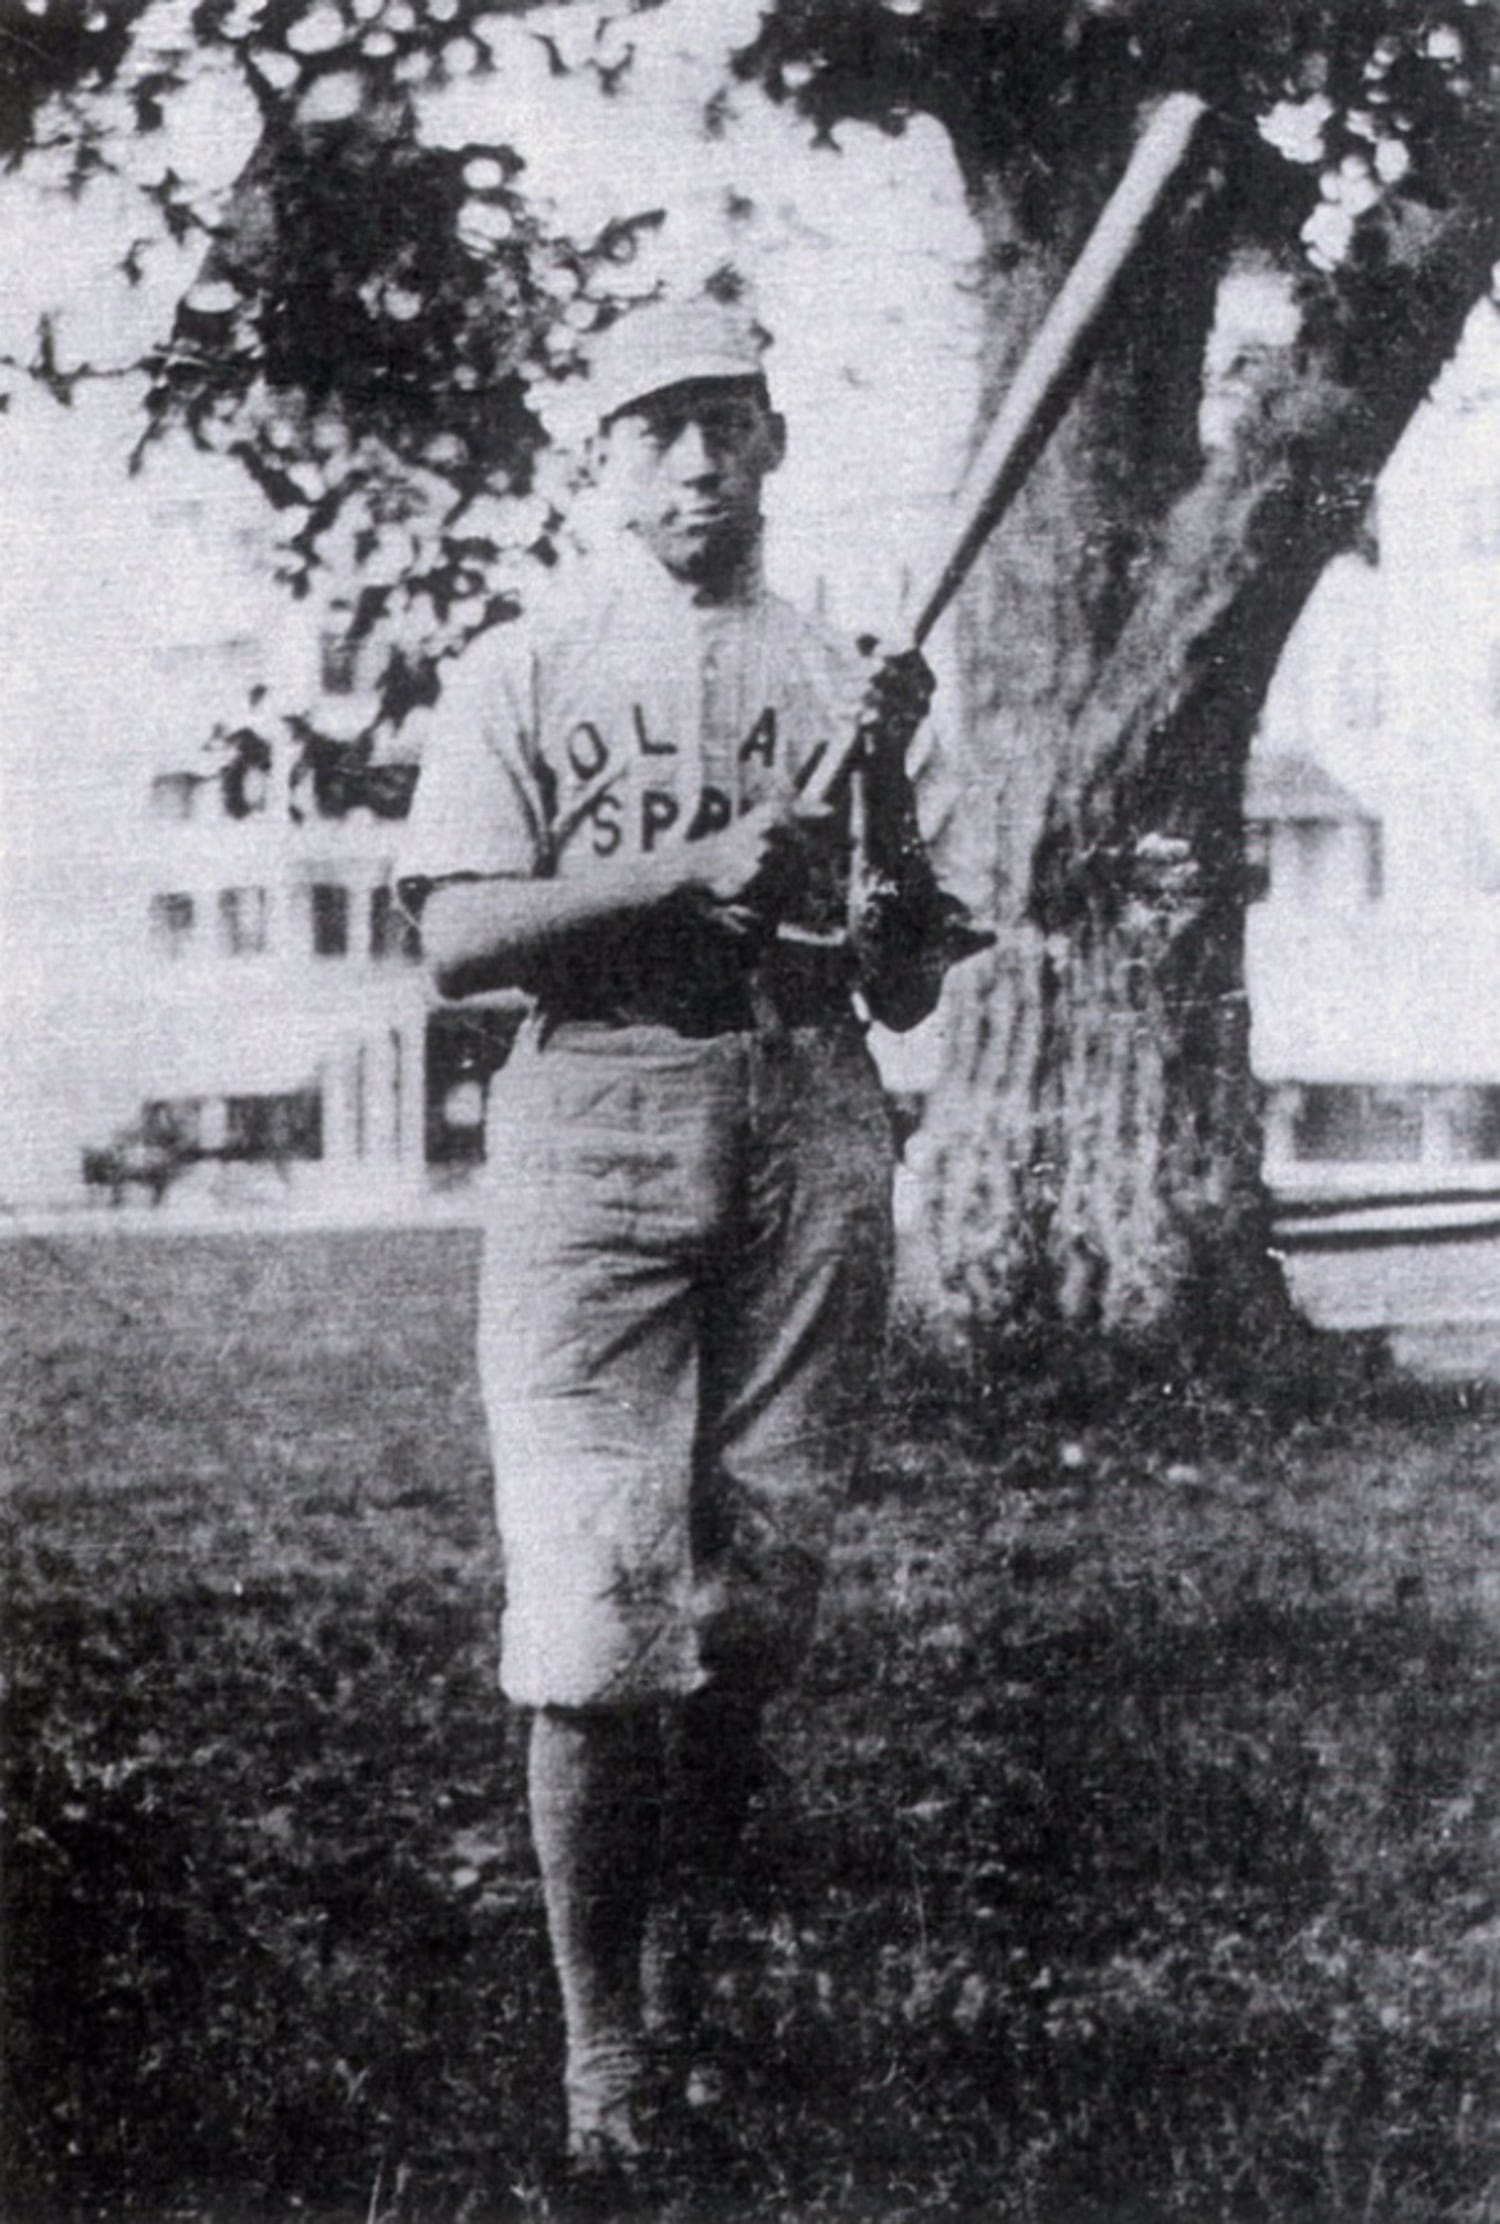 Major League Baseball Chief Wahoo Mascot - Cleveland indians 1915